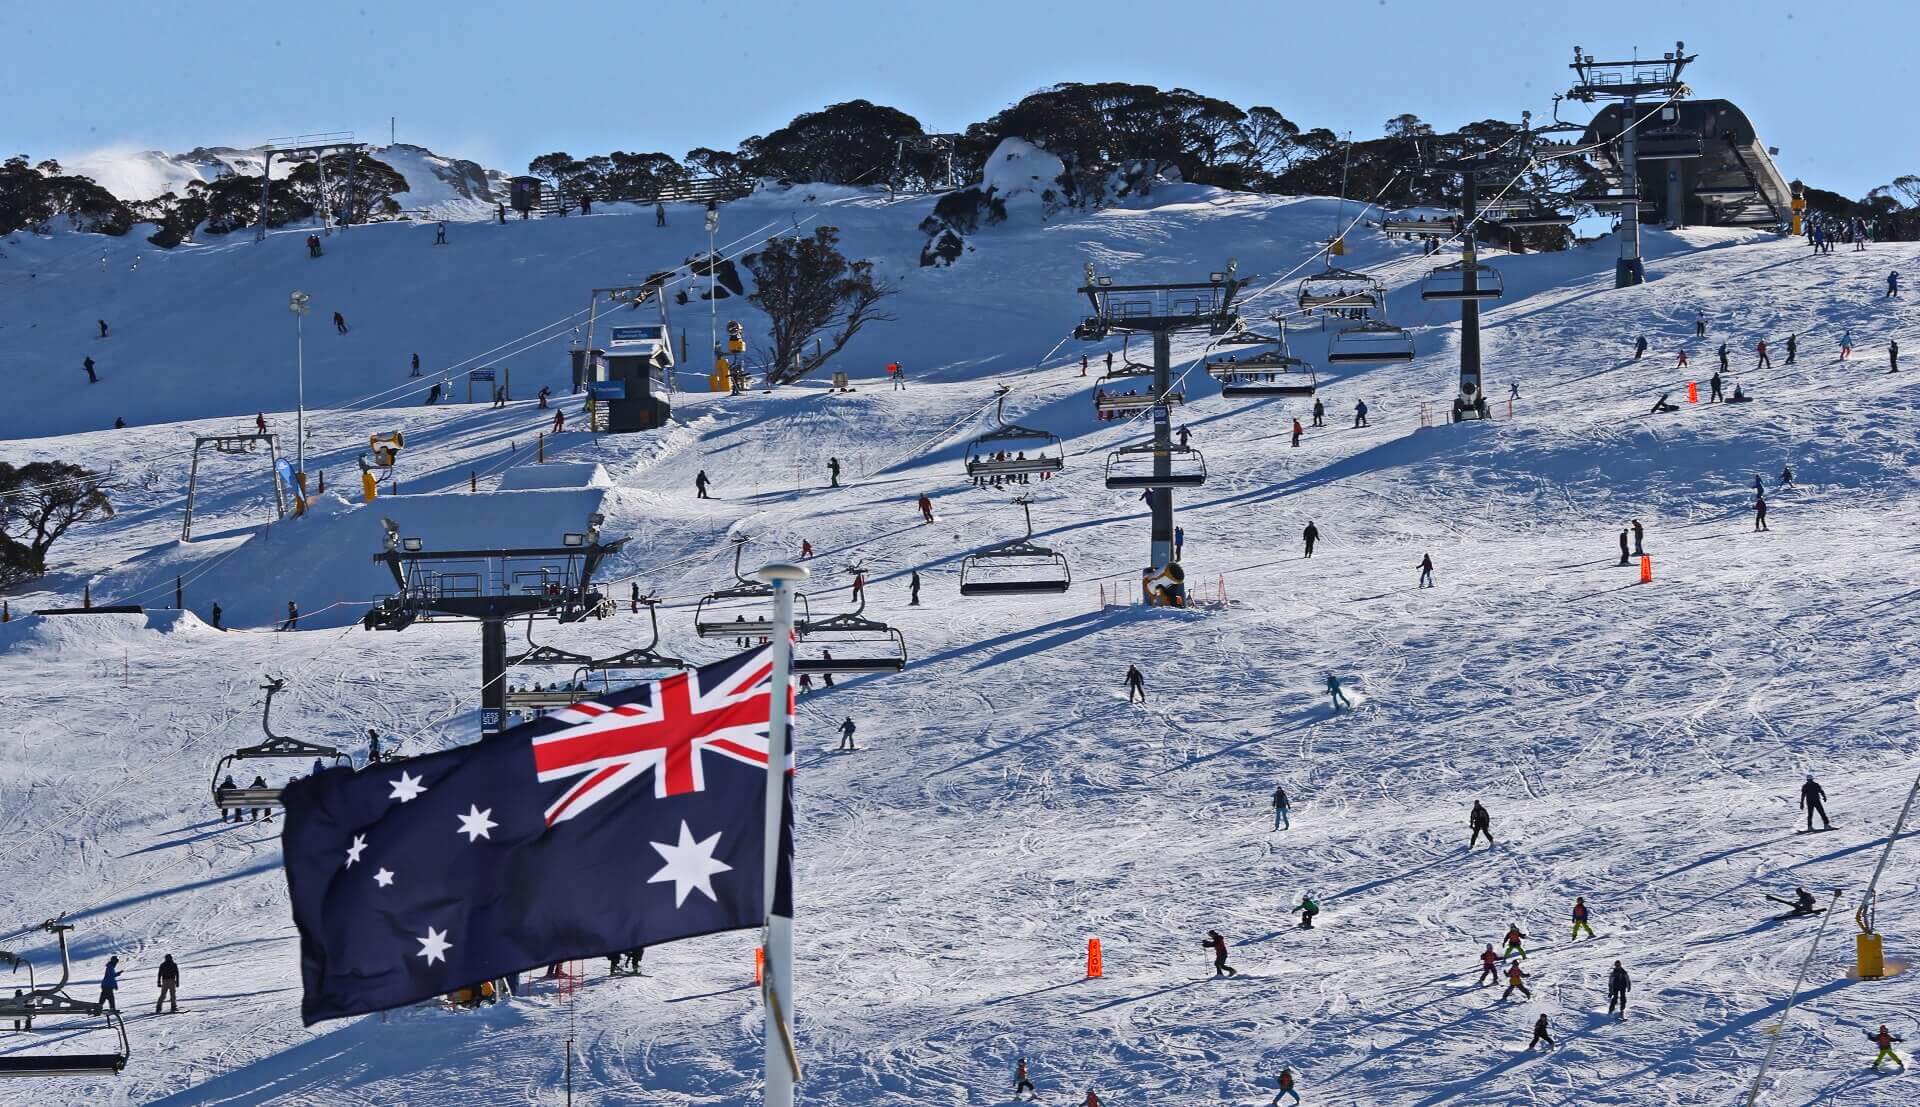 So… Will Australian Ski Resorts Open This Season? Unofficial Networks